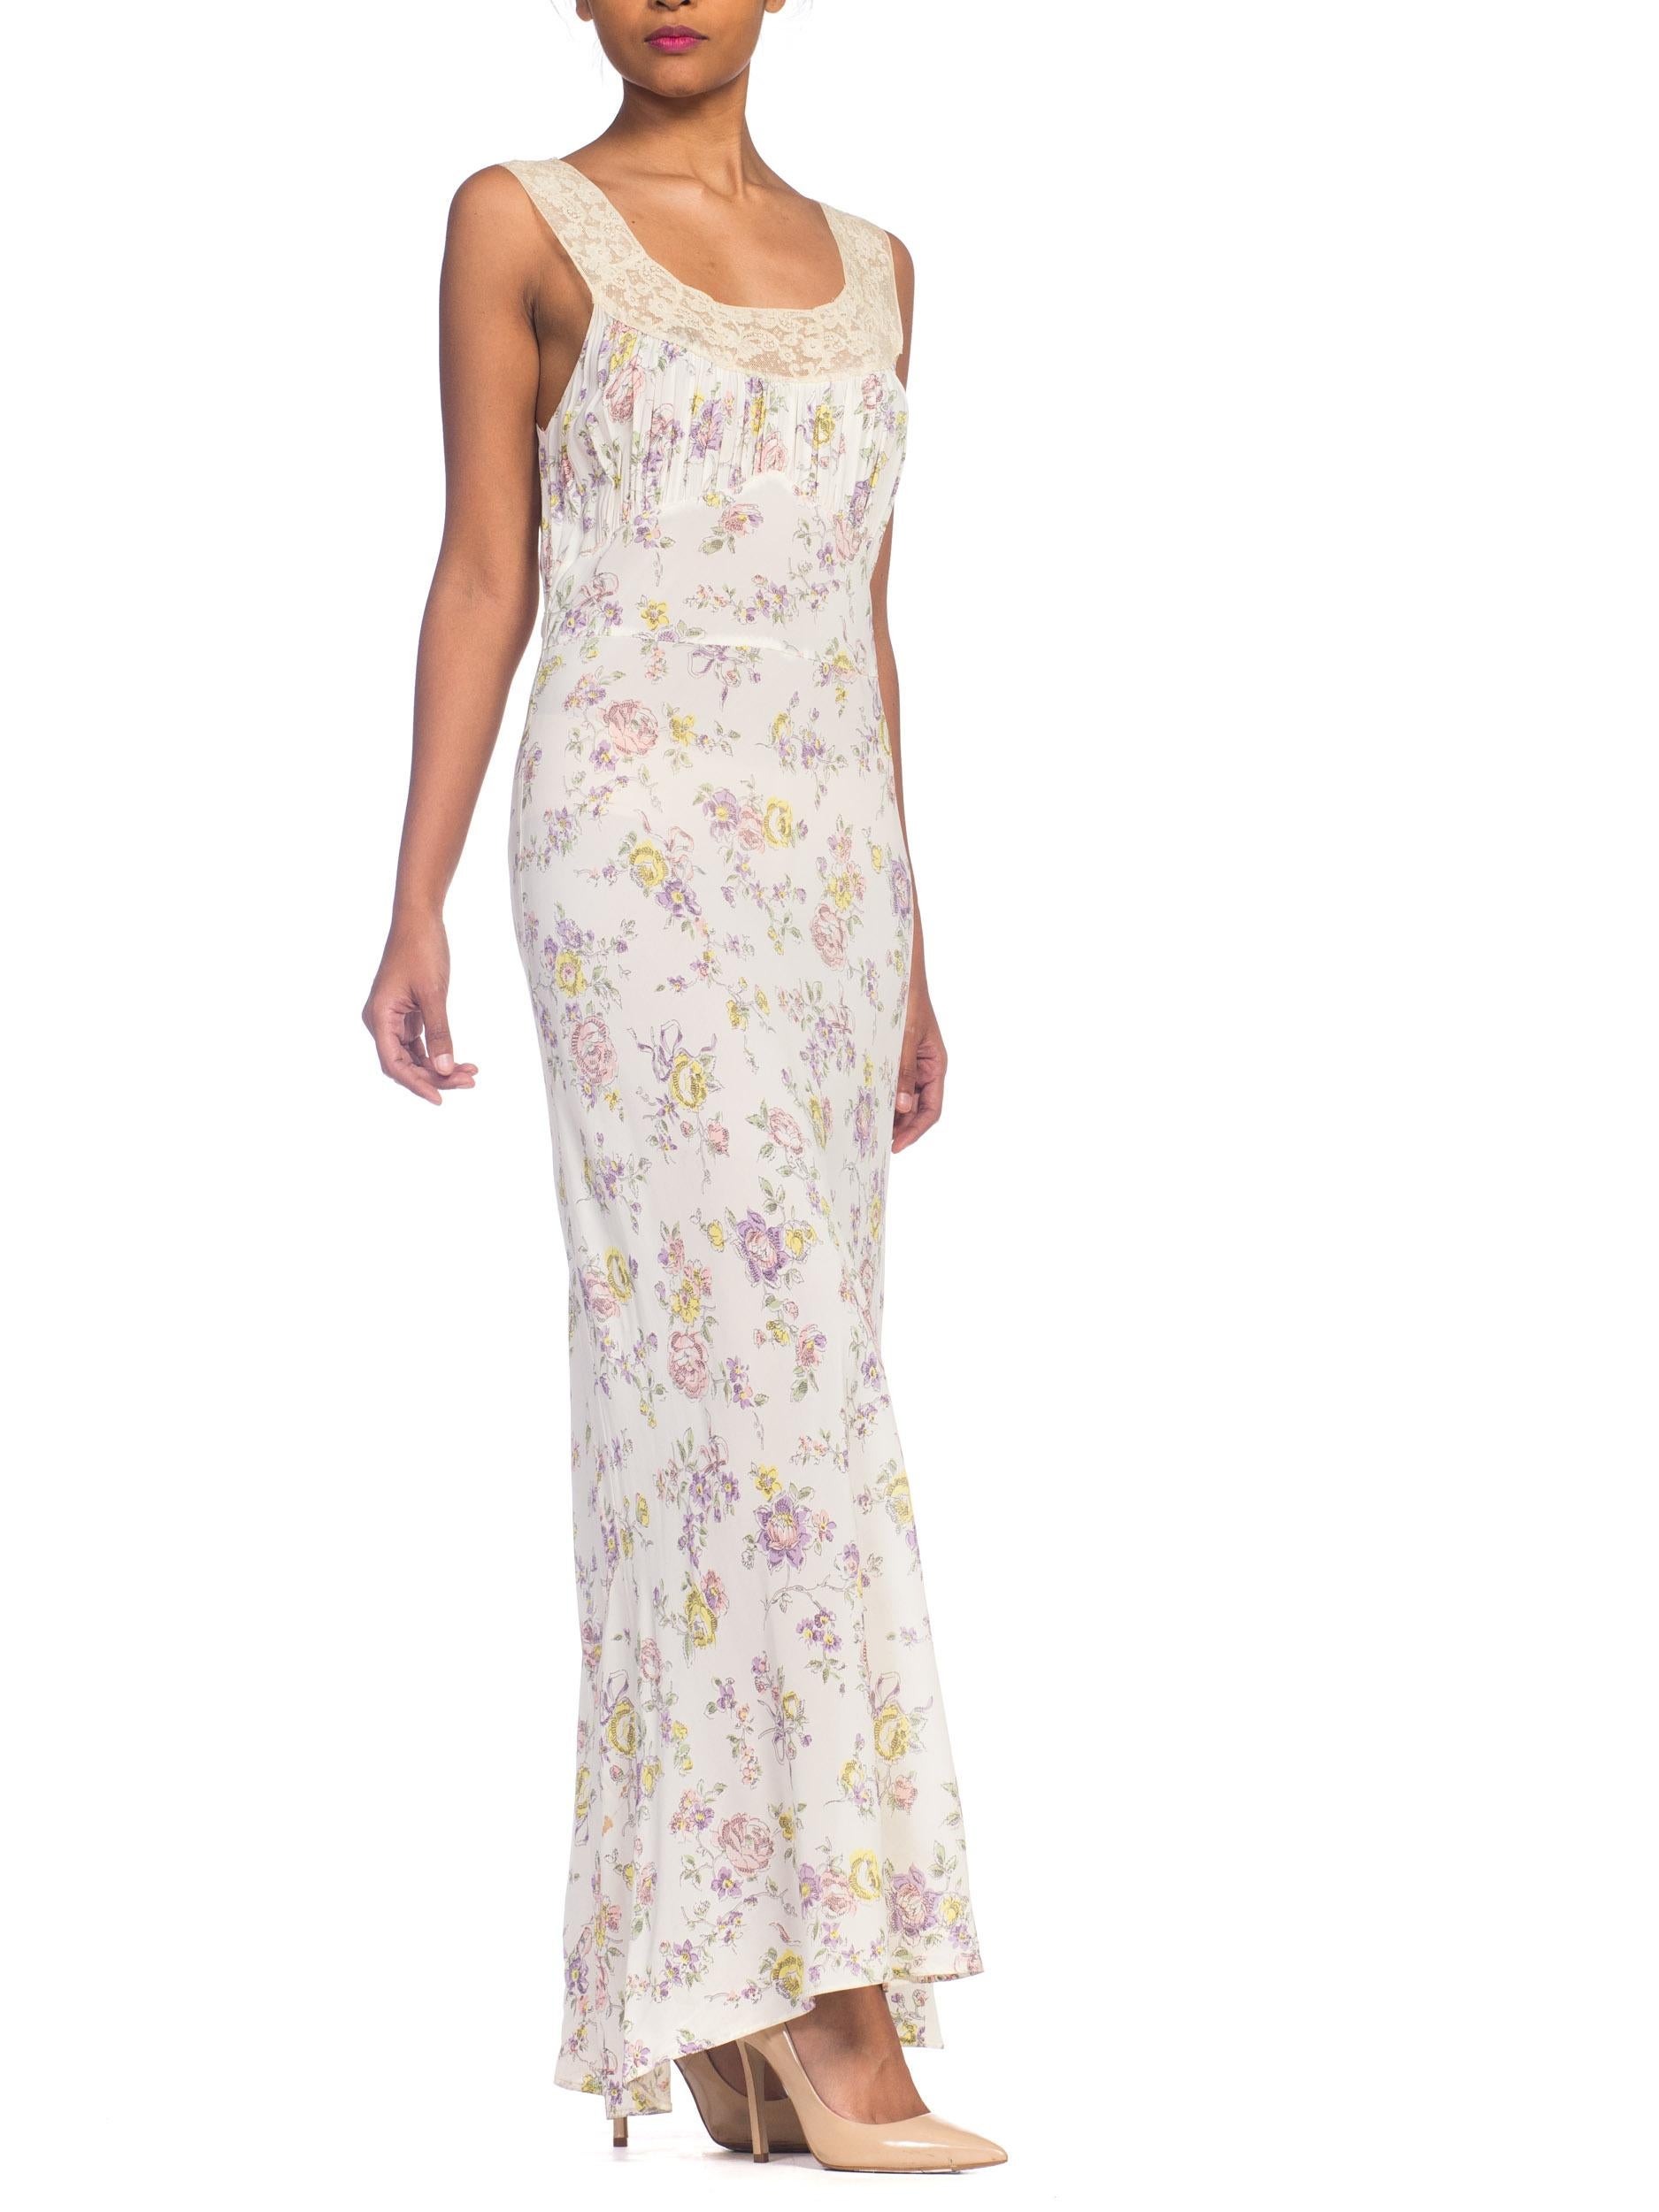 Beige 1930s Bias Cut Floral Rayon & Lace Negligee Slip Dress